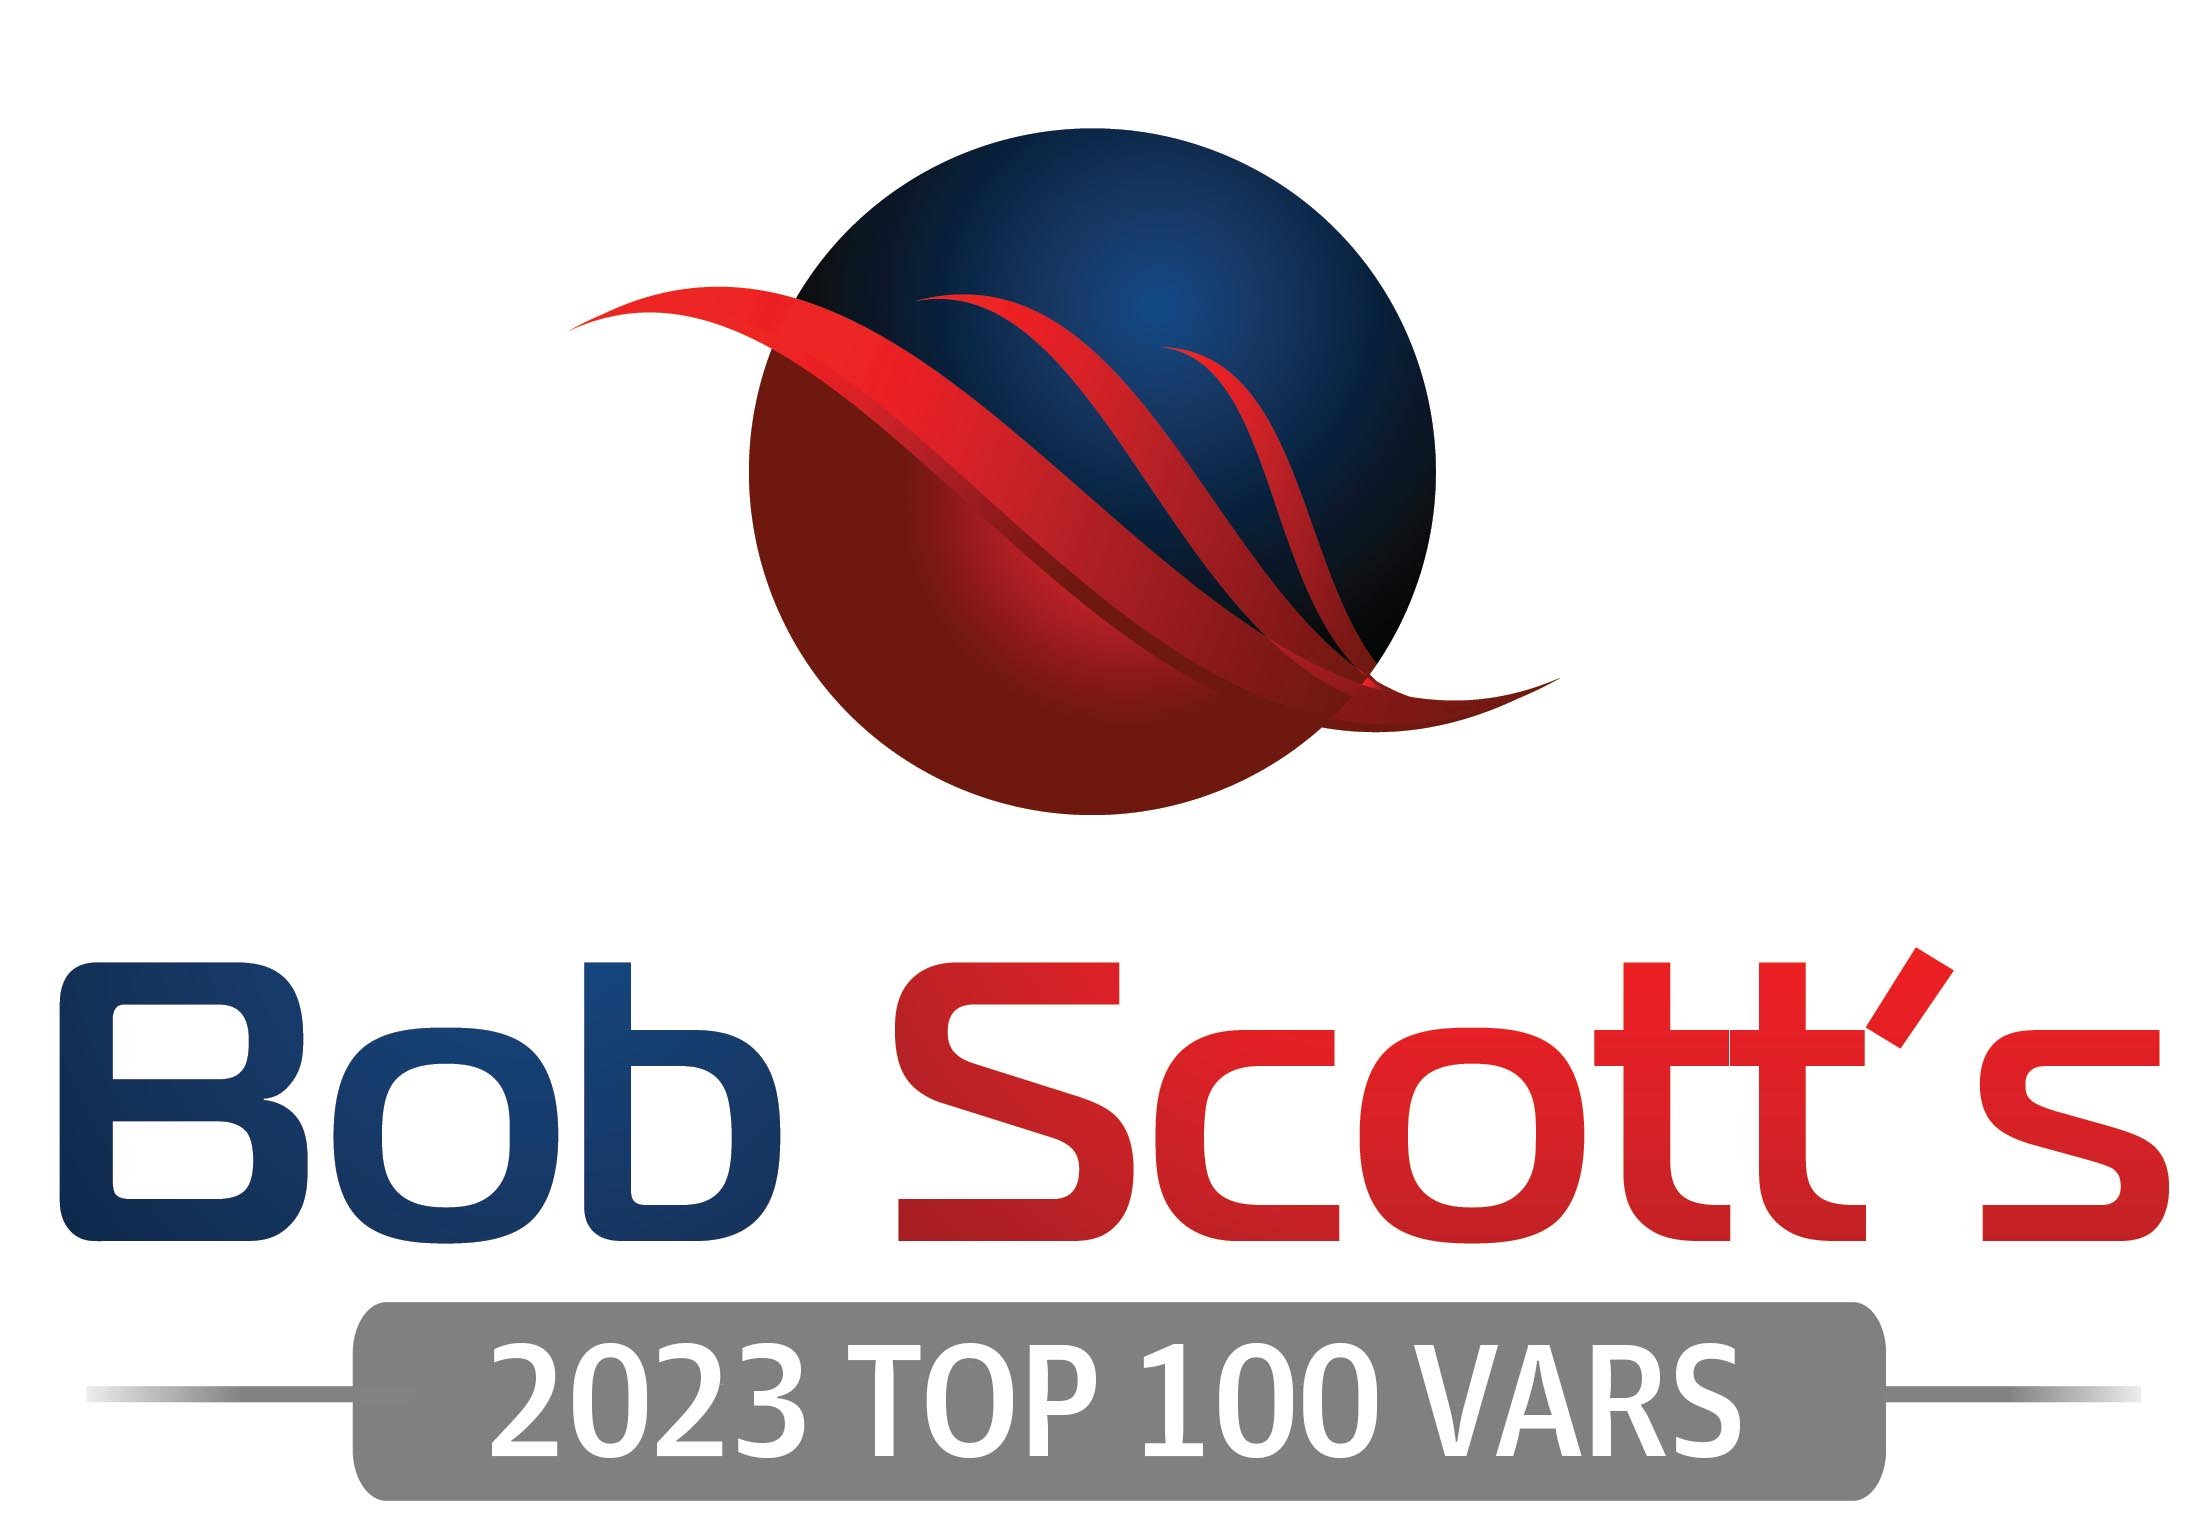 Bob Scott's 2023 Top 100 VARS